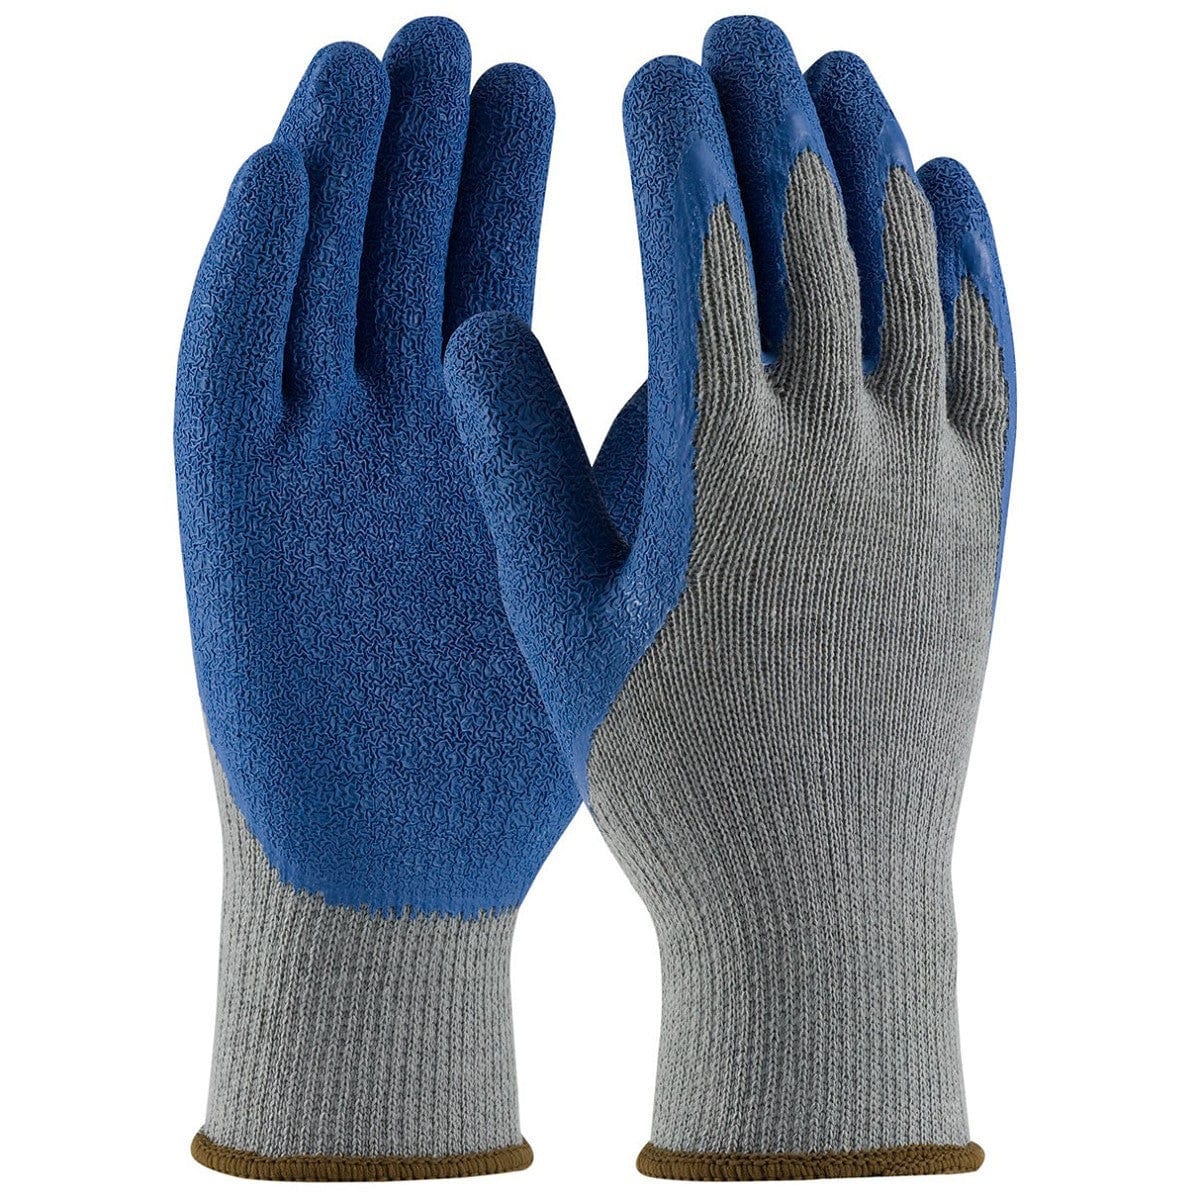 PIP 39-C1305 G-Tek Seamless Knit Cotton/Polyester Gloves - Latex Coated Crinkle Grip on Palm & Fingers - Regular Grade